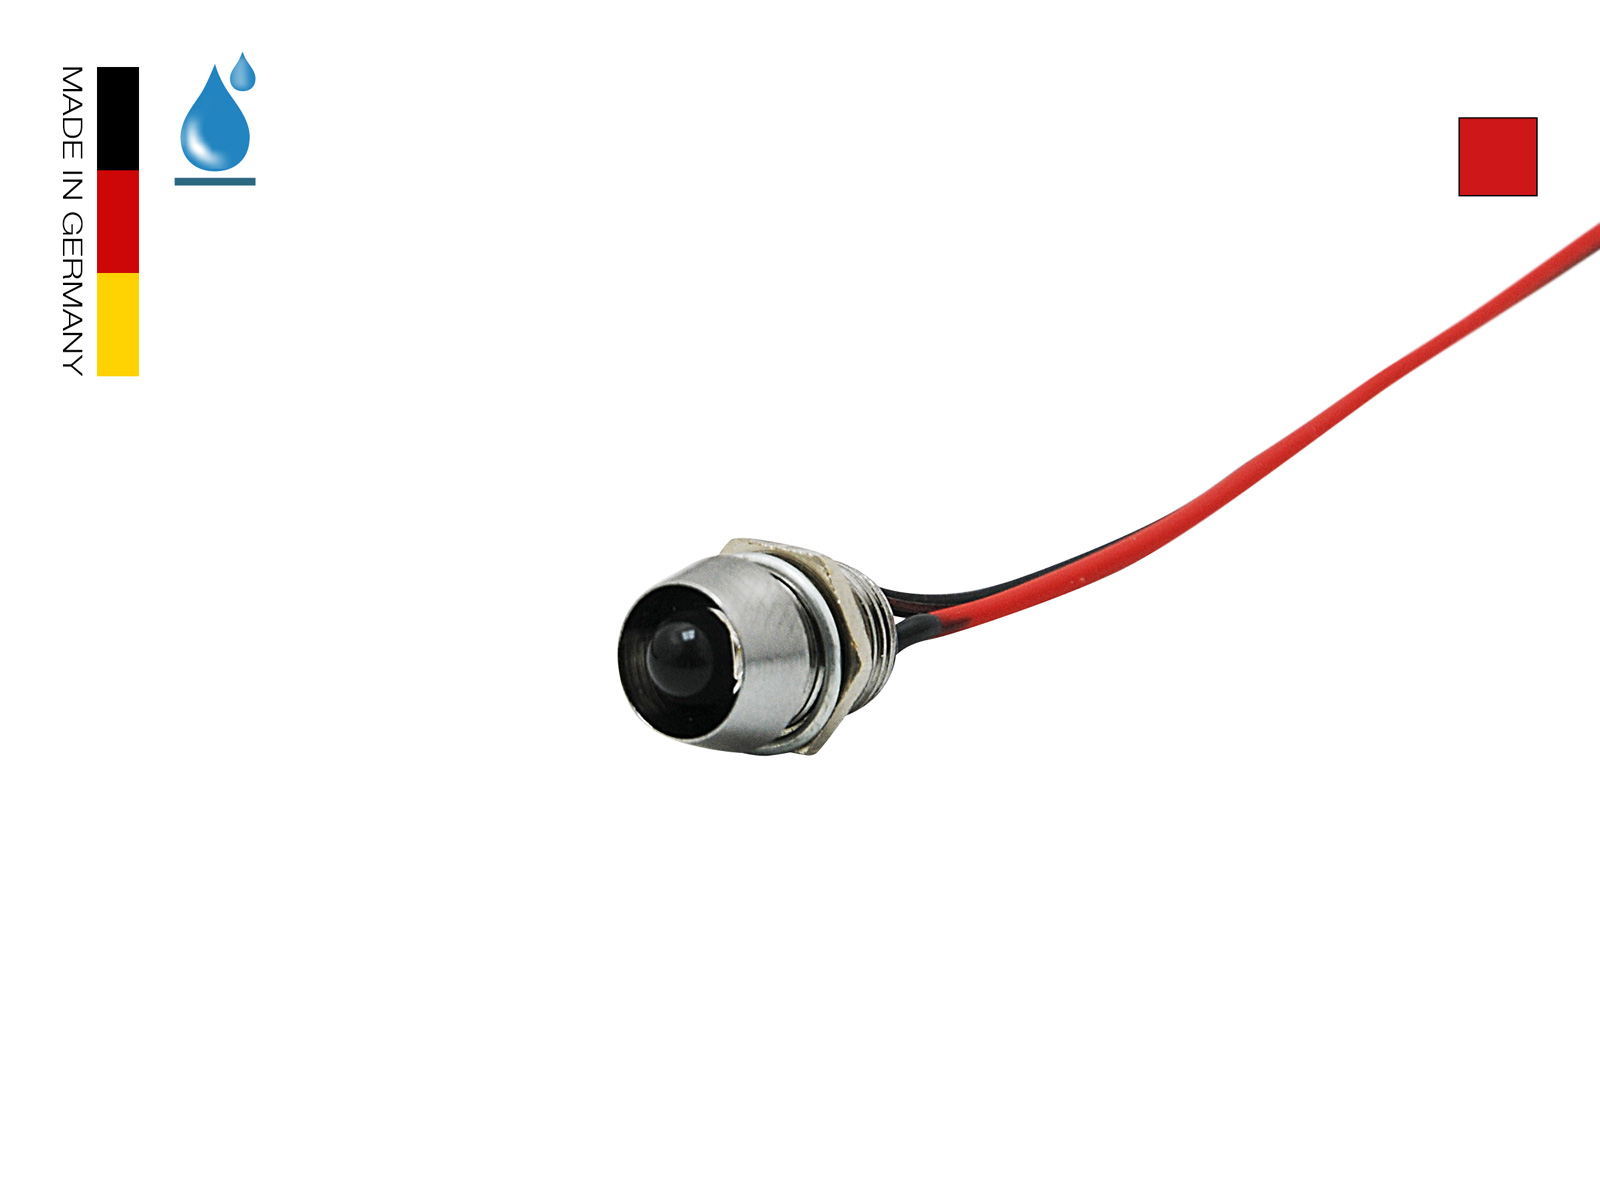 LED Schraube 12Vdc rot 5mm Chromgehäuse wasserdicht IP67 kaufen | PUR-LED